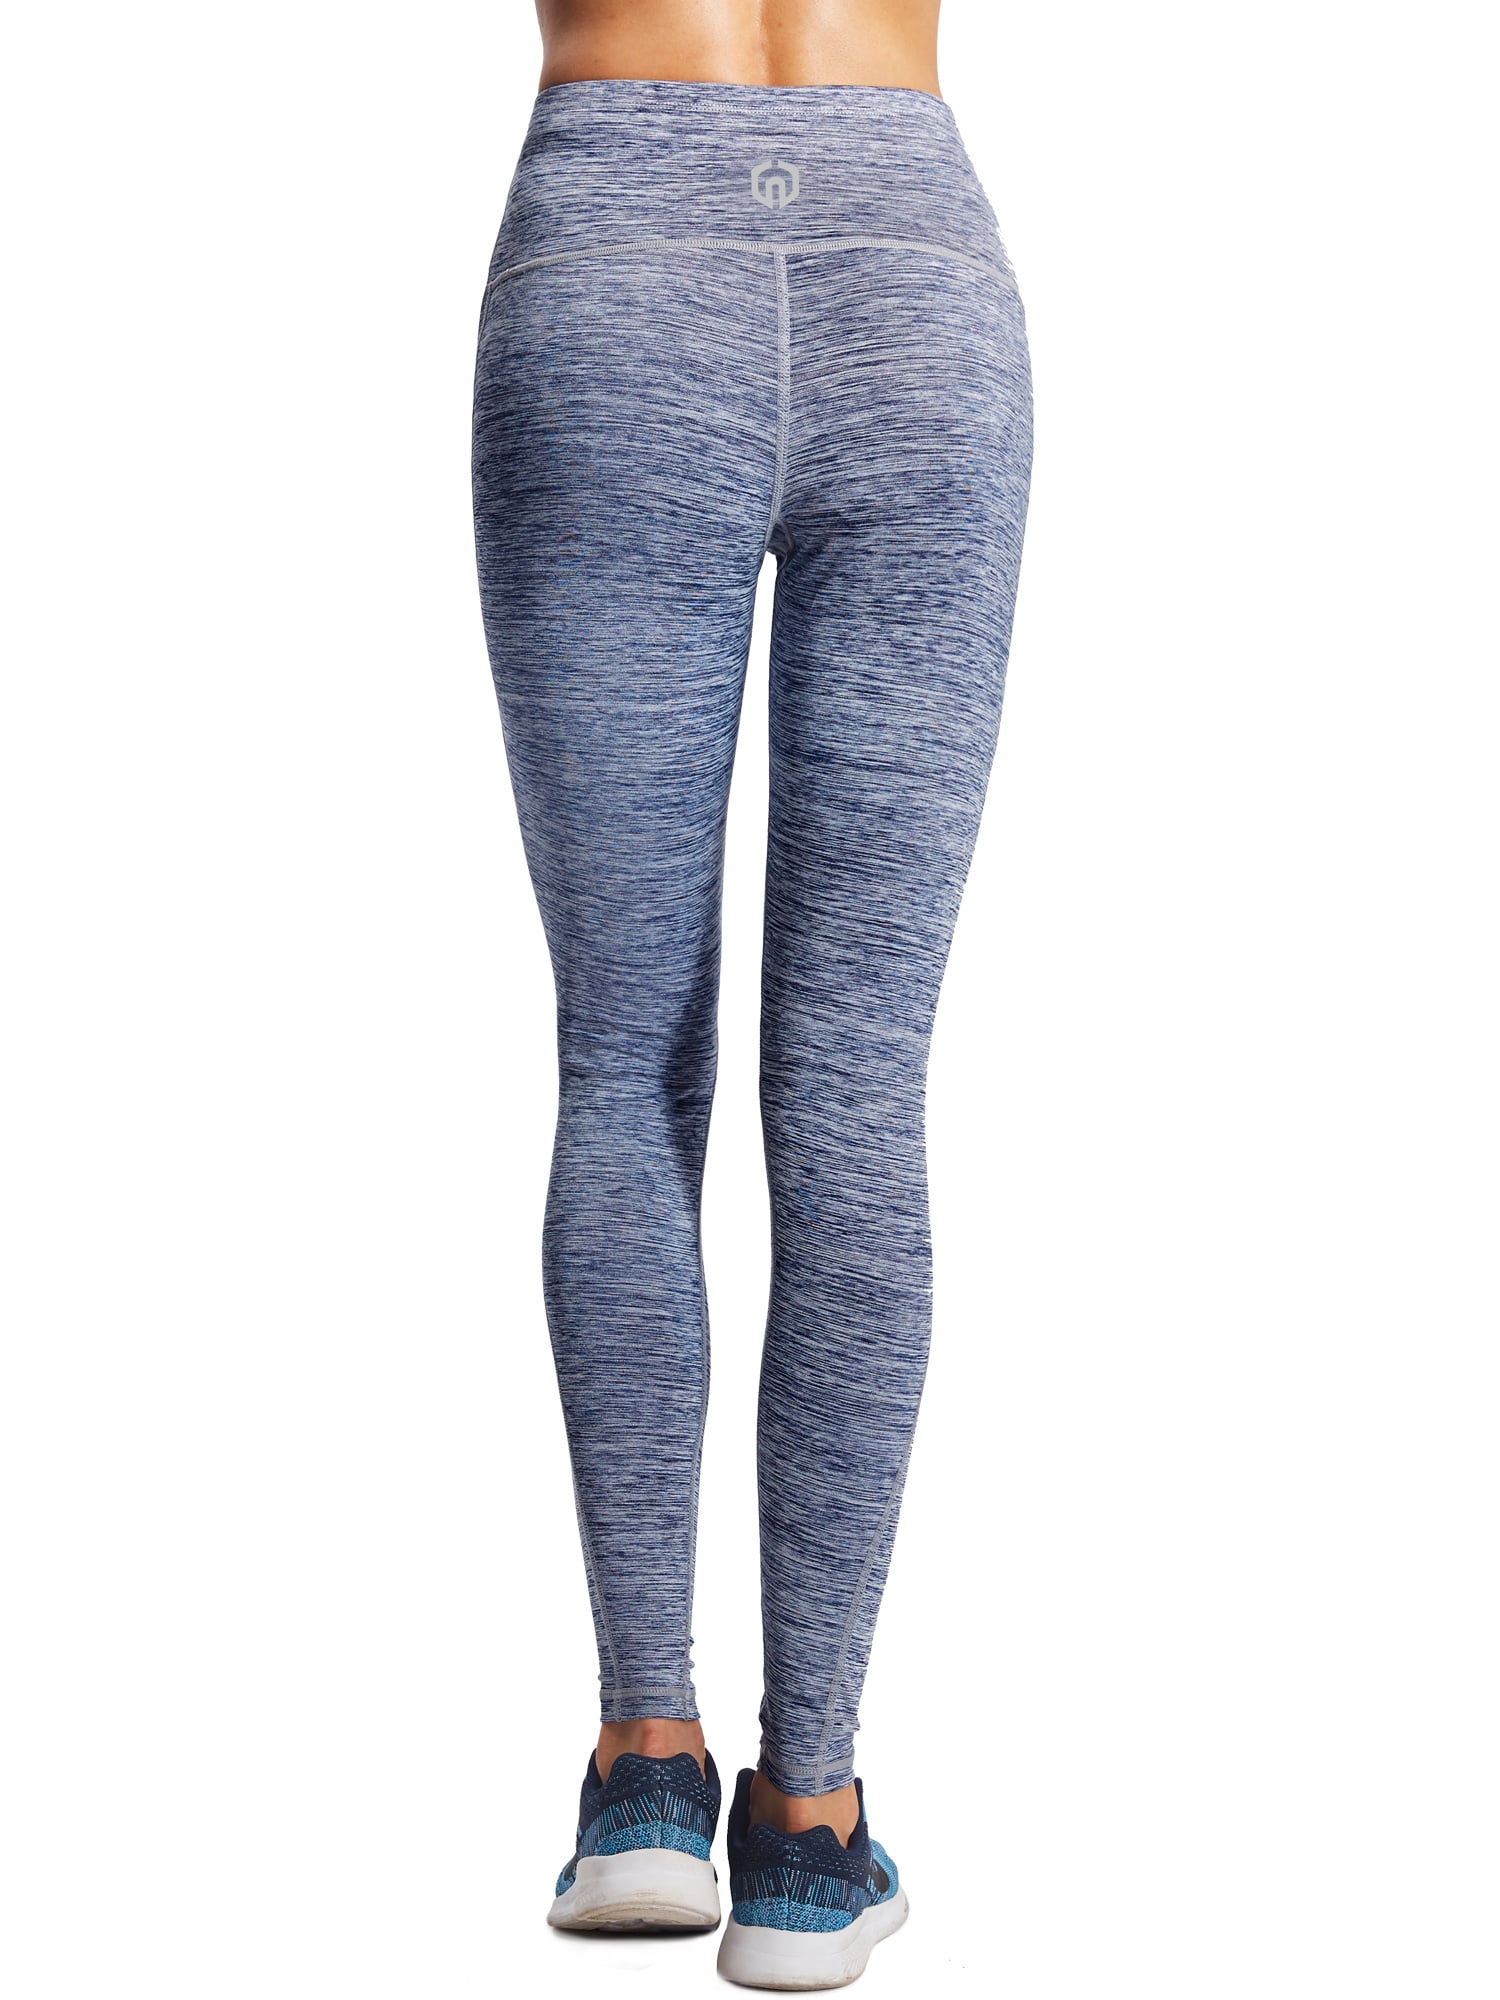 NELEUS Women's Yoga Leggings Tummy Control Workout Running Pants(102 Dark  Grey/Grey/Burgundy Red,3 Pack) - NELEUS